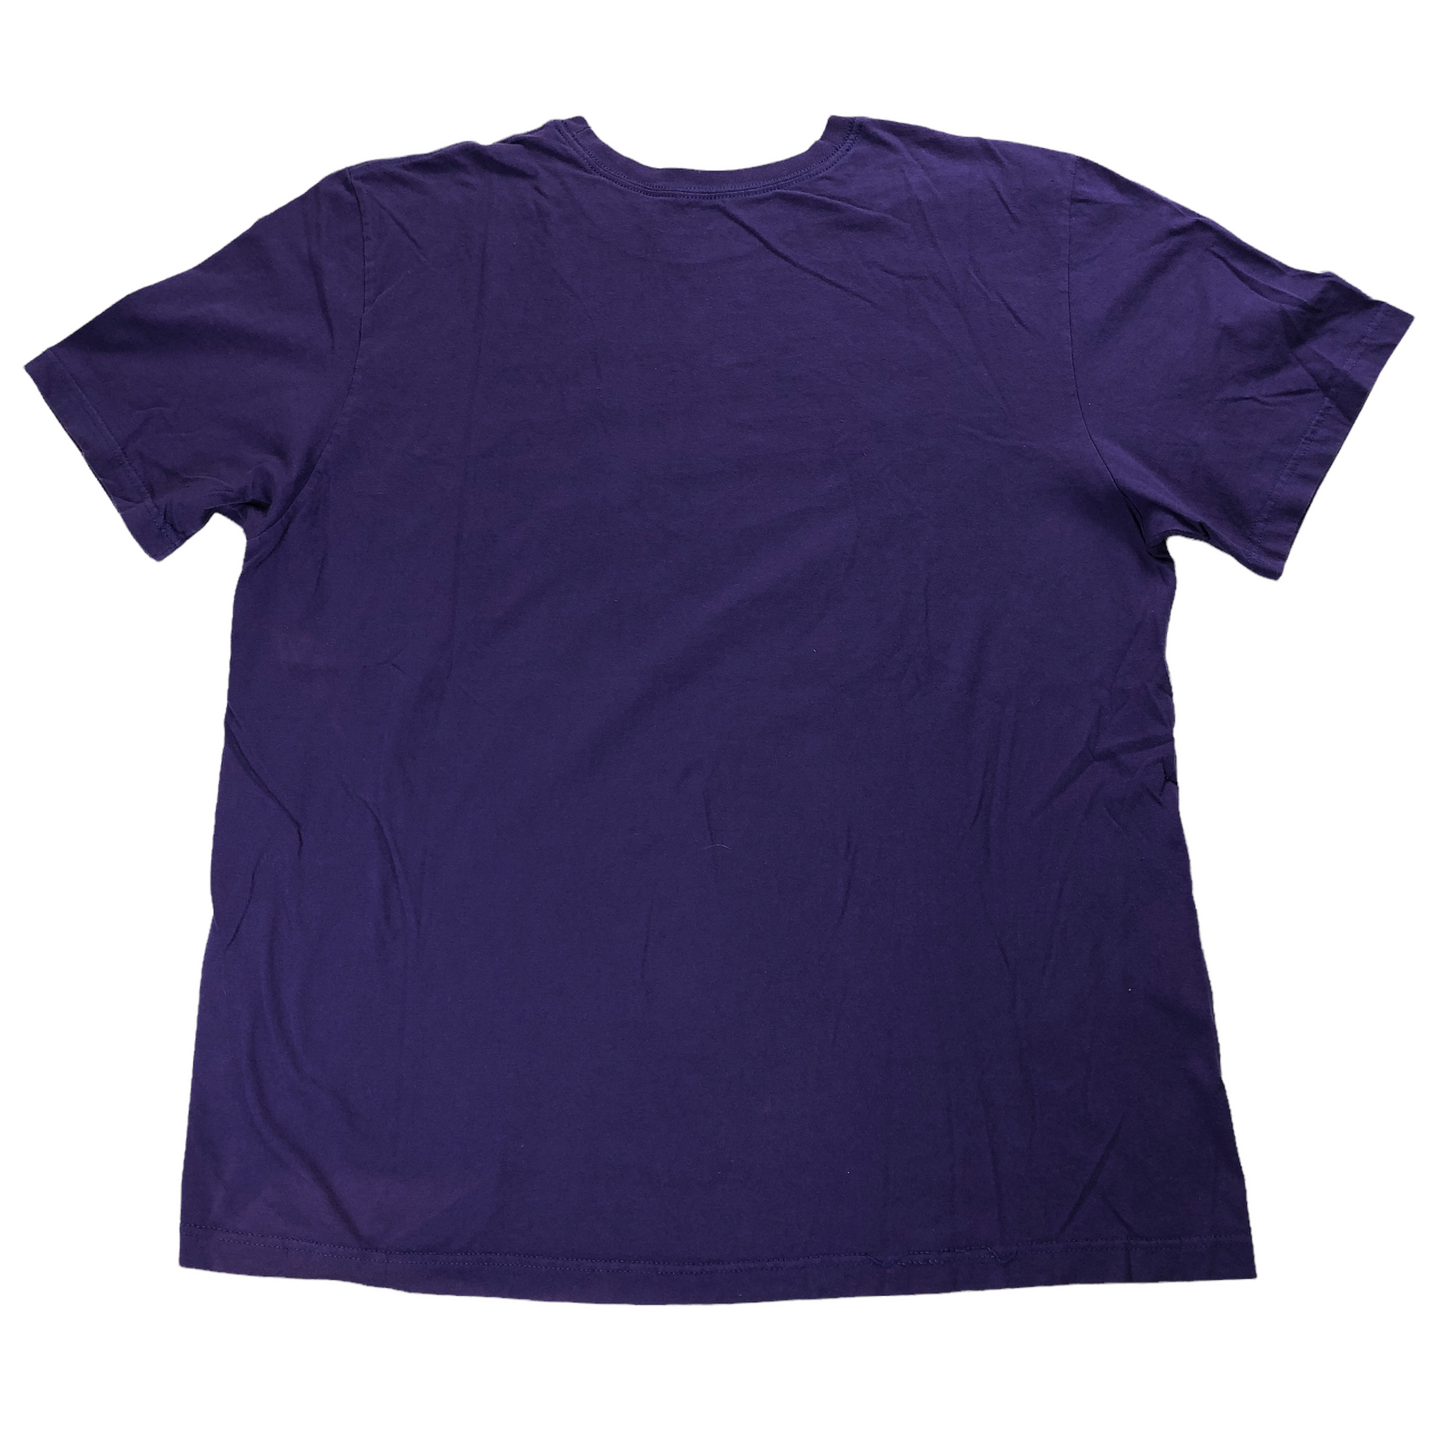 NIKE ナイキ Tシャツ 半袖 カットソー フロントロゴ ビッグロゴ